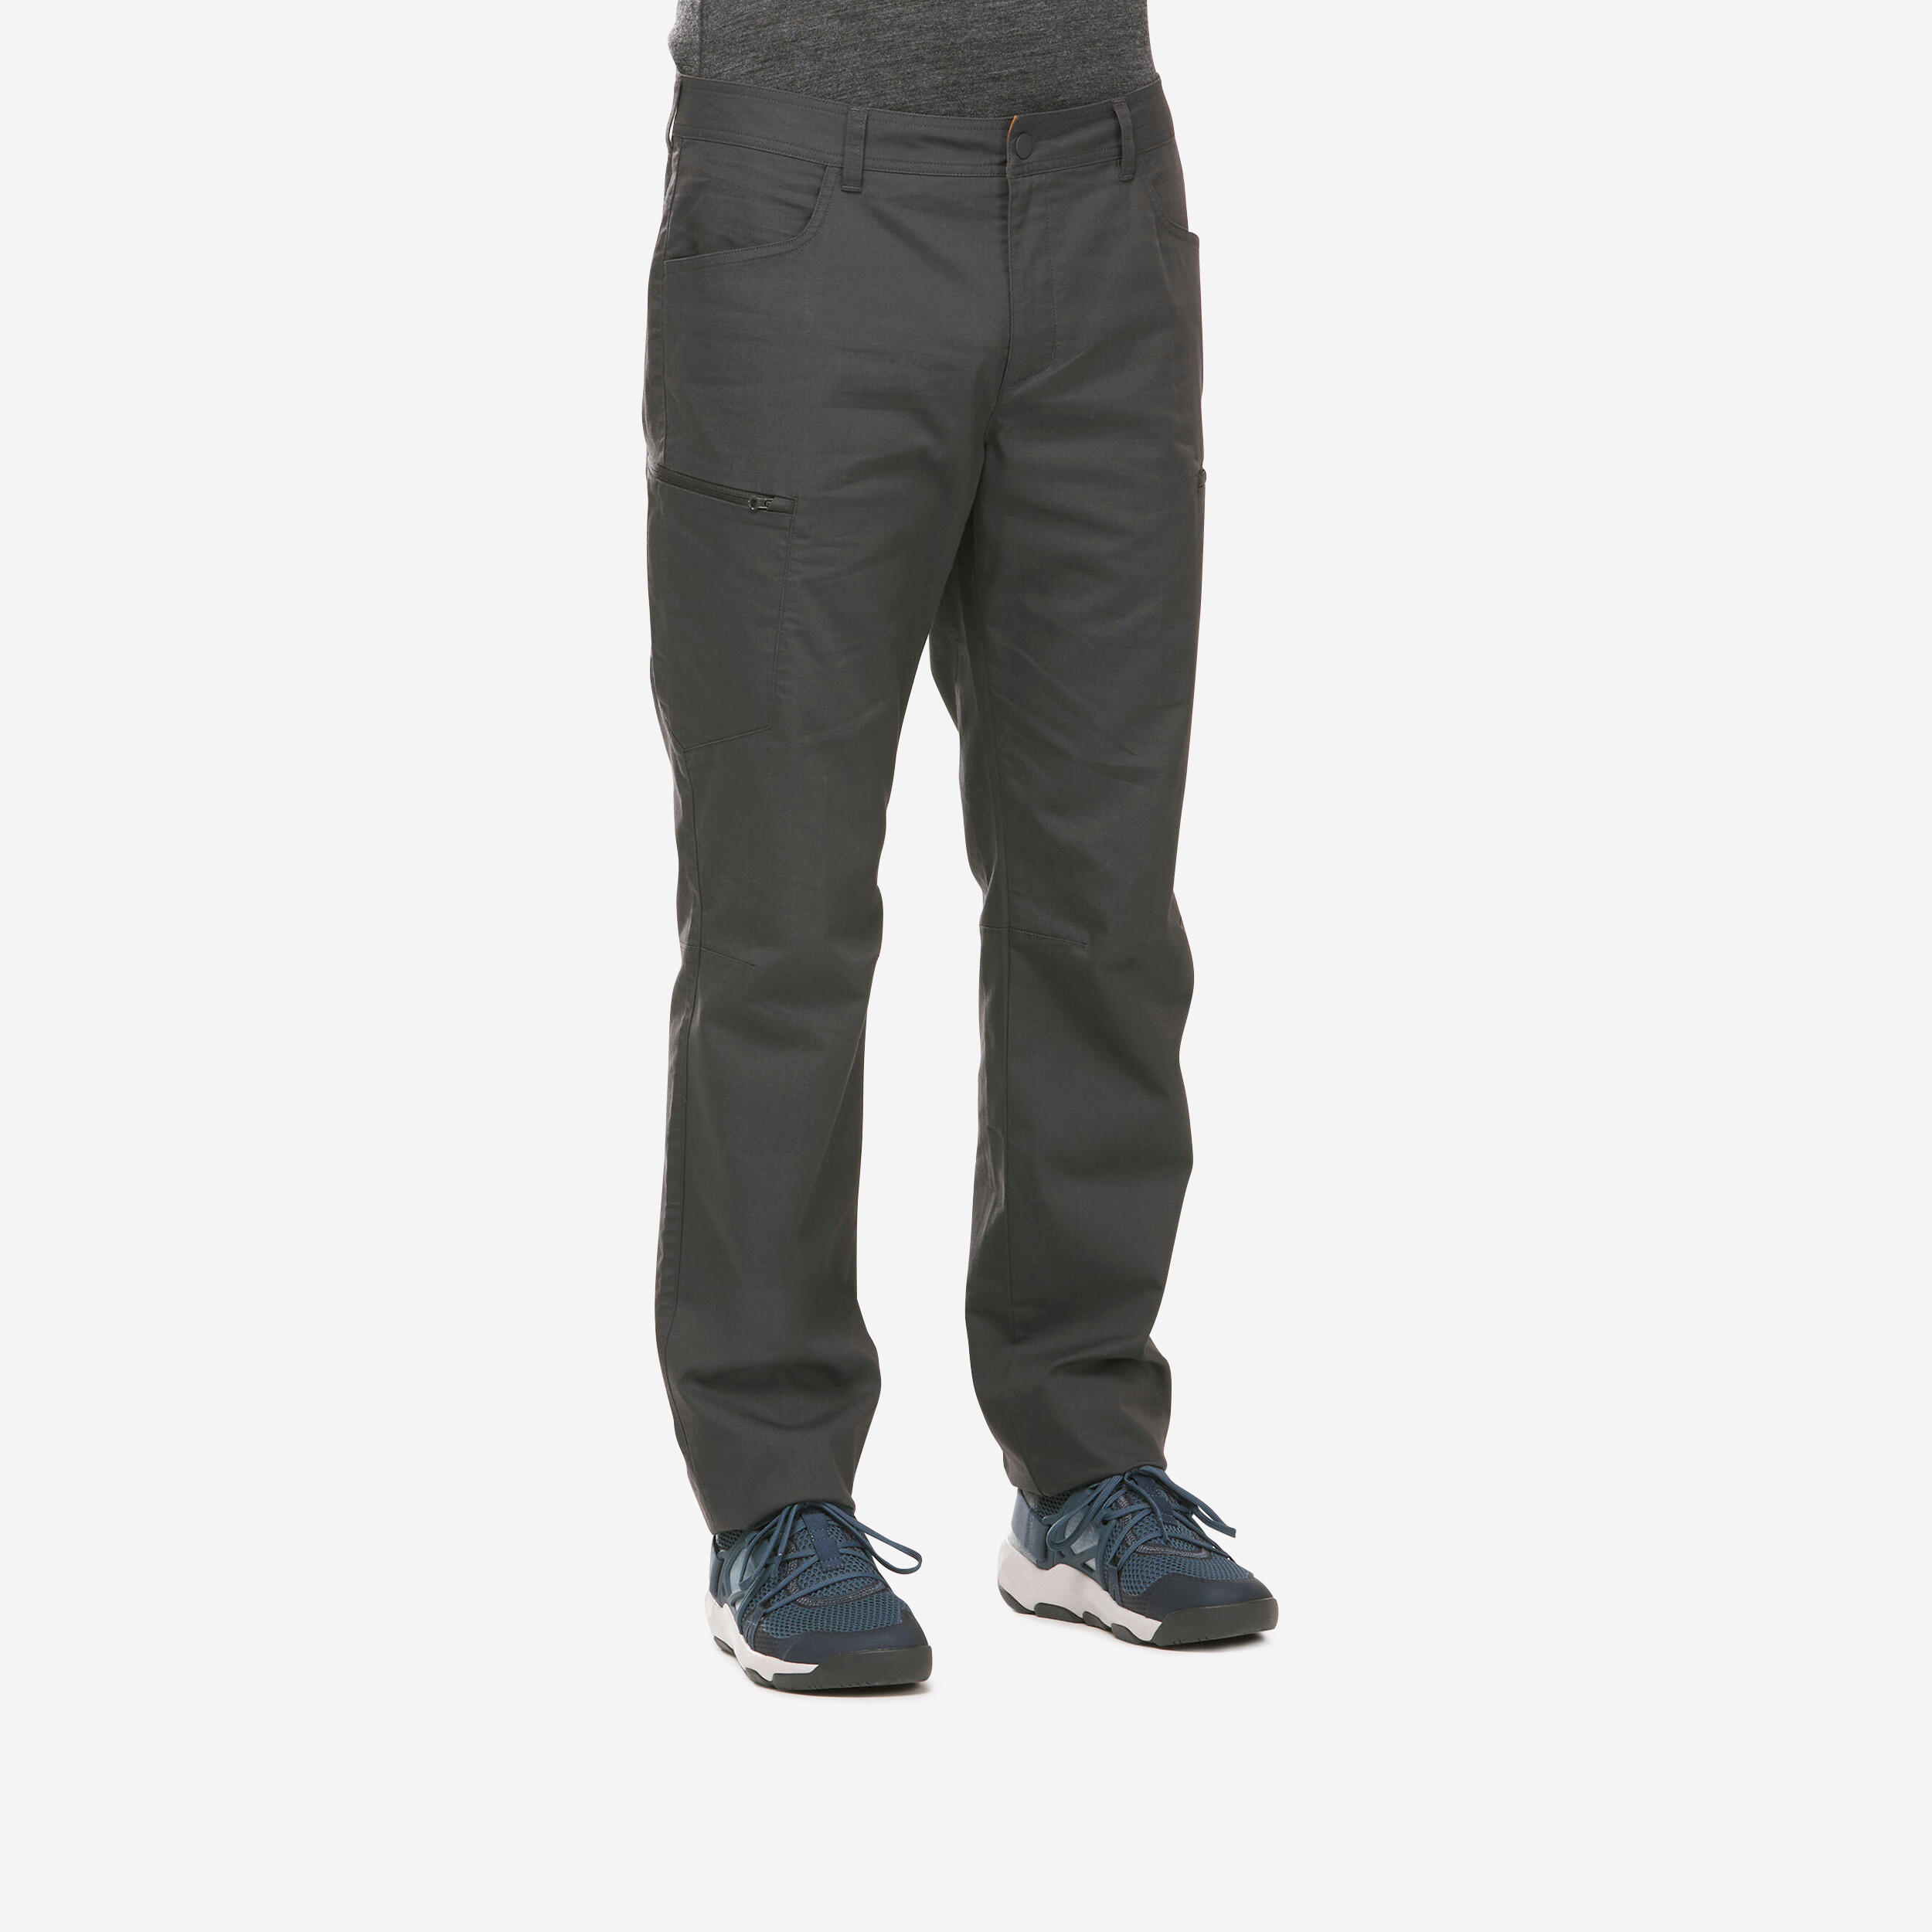 Men's Travel Backpacking Zip-Off Cargo Pants - Travel 100 Zip-Off - khaki |  Mens travel, Mens outdoor wear, Hiking pants mens